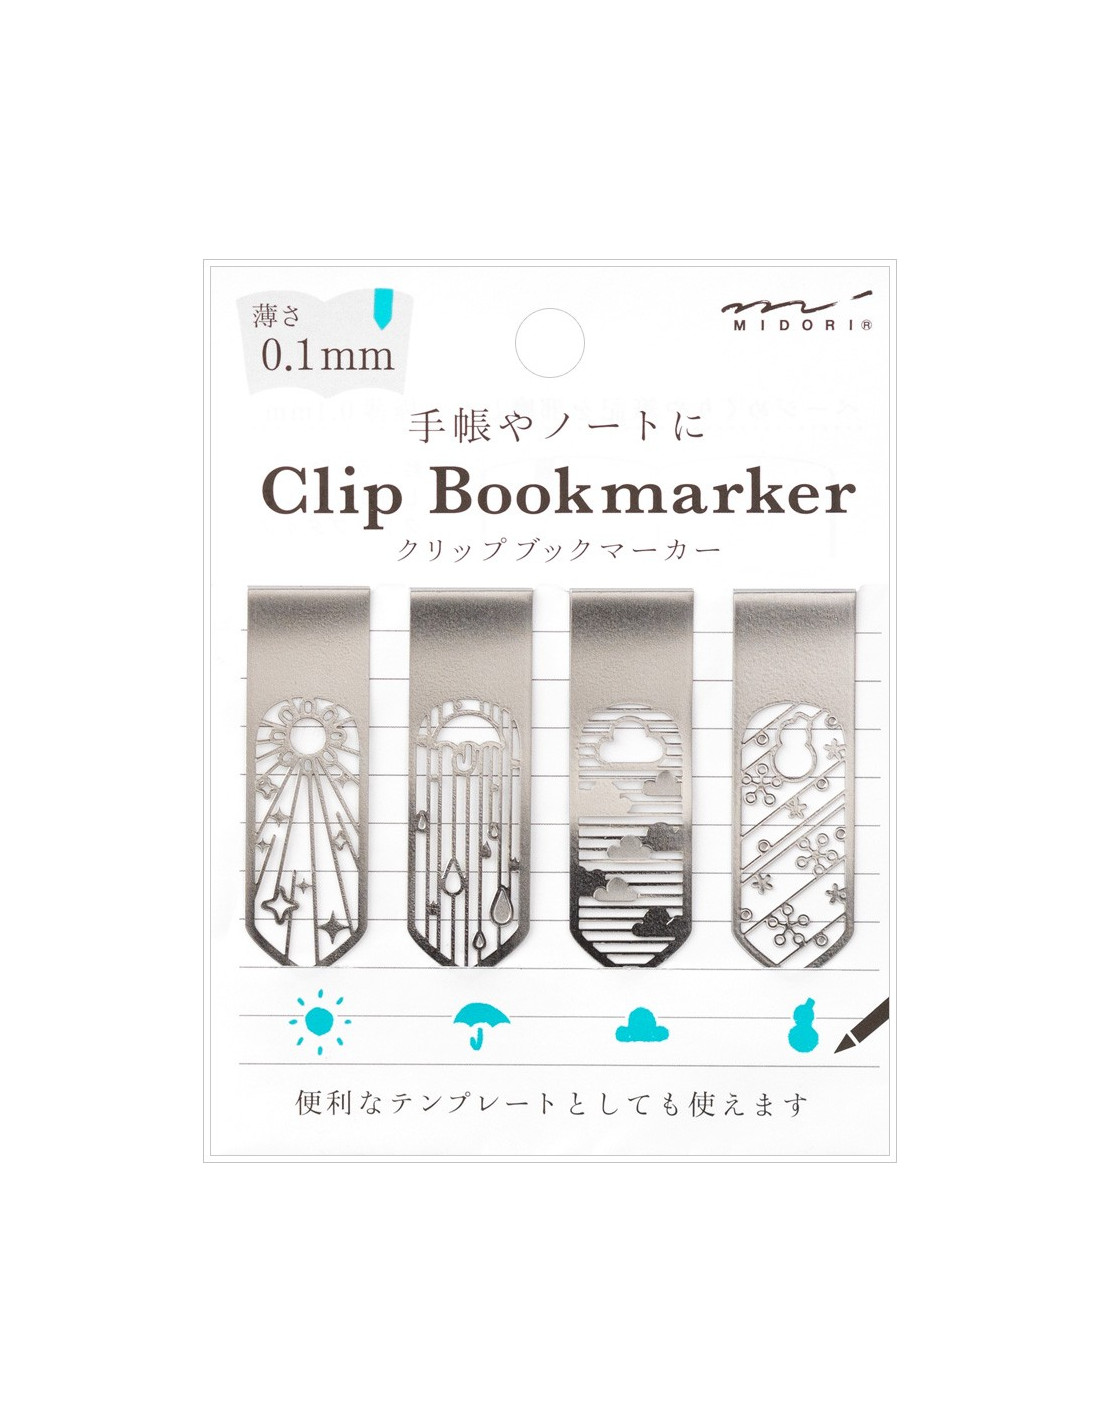 4 metal bookmarks and stencils - Weather - Midori